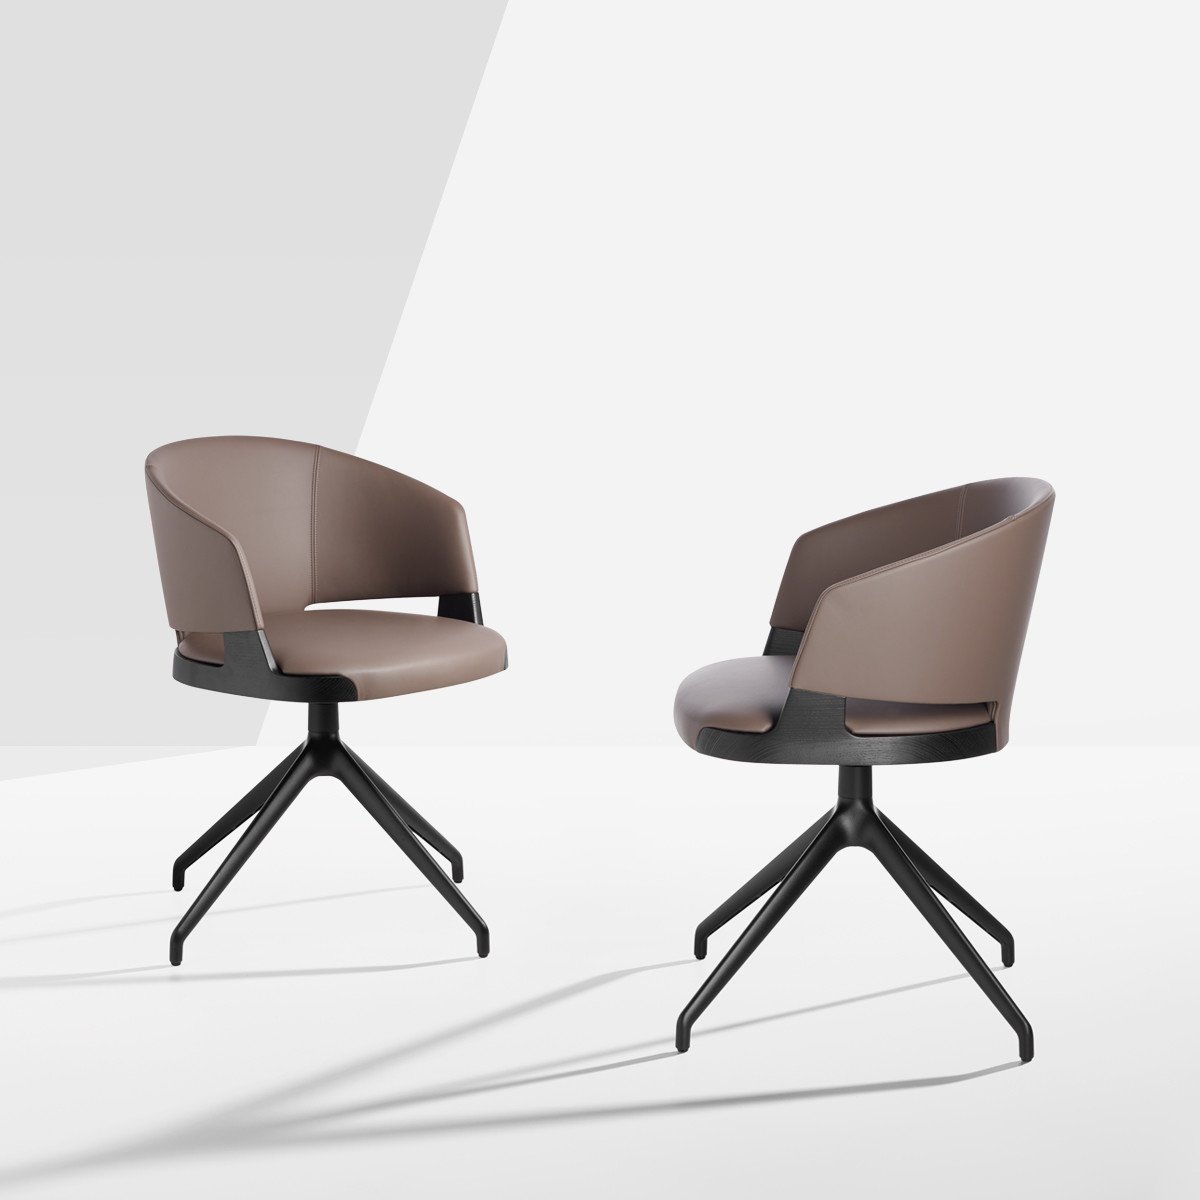 Velis Swivel Chair from Potocco, designed by Mario Ferrarini